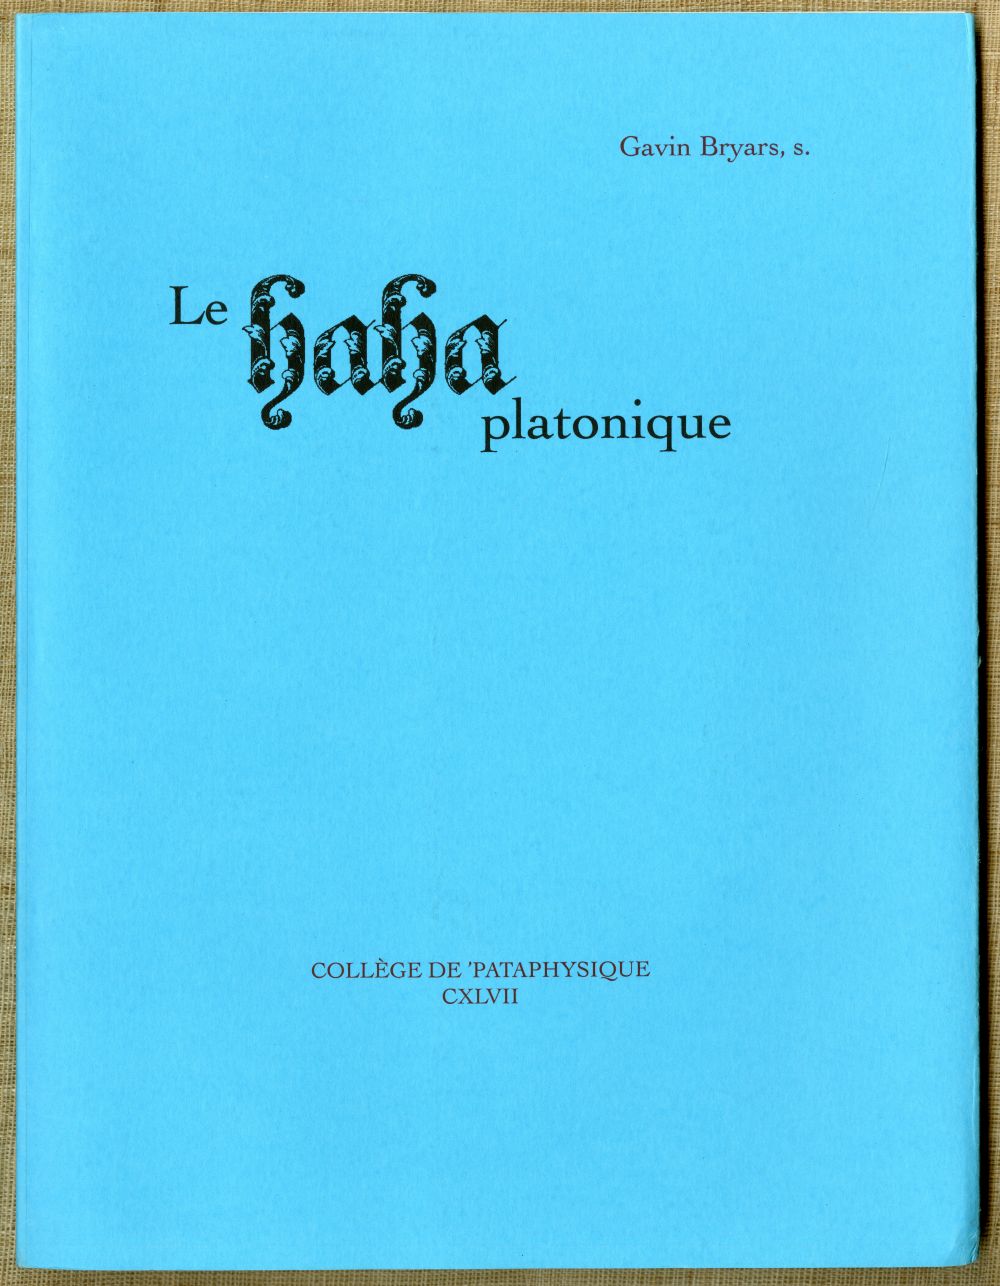 Gavin Bryars『Le haha platonique』表紙